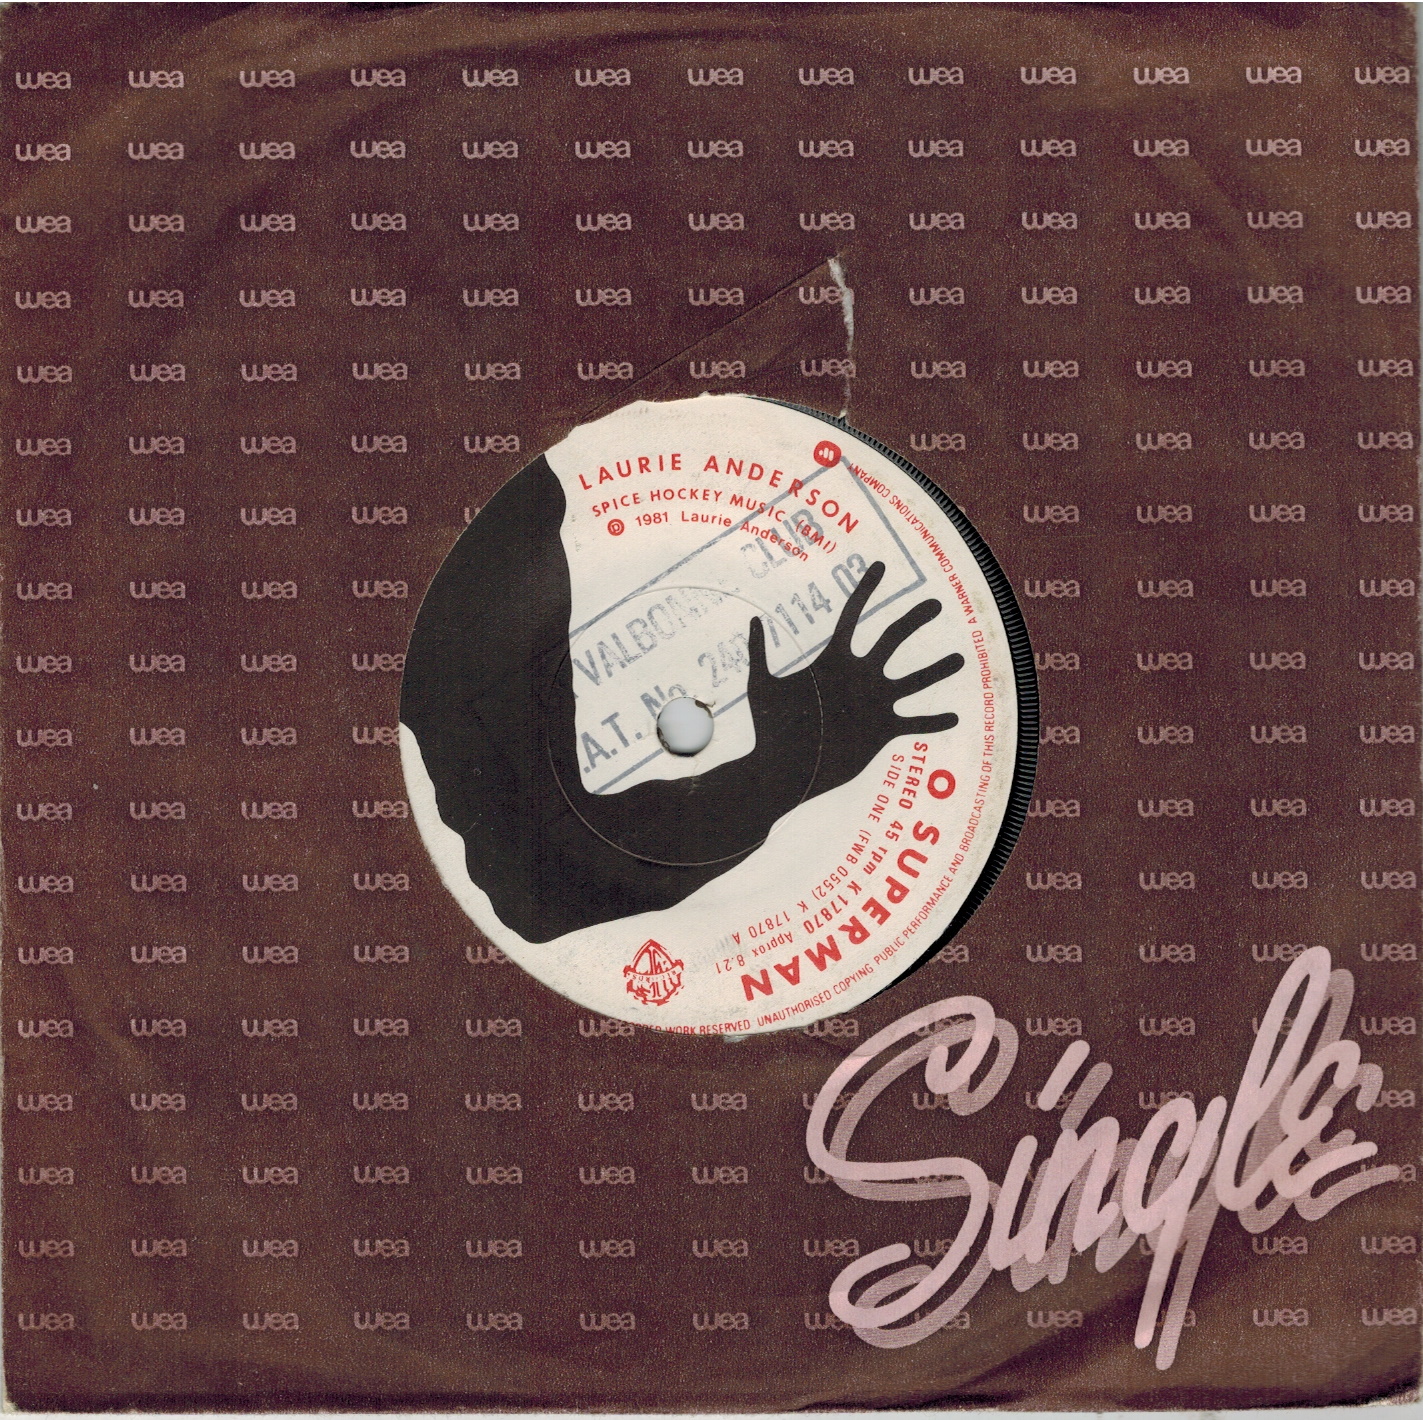 Single vinyl / 7 inch 